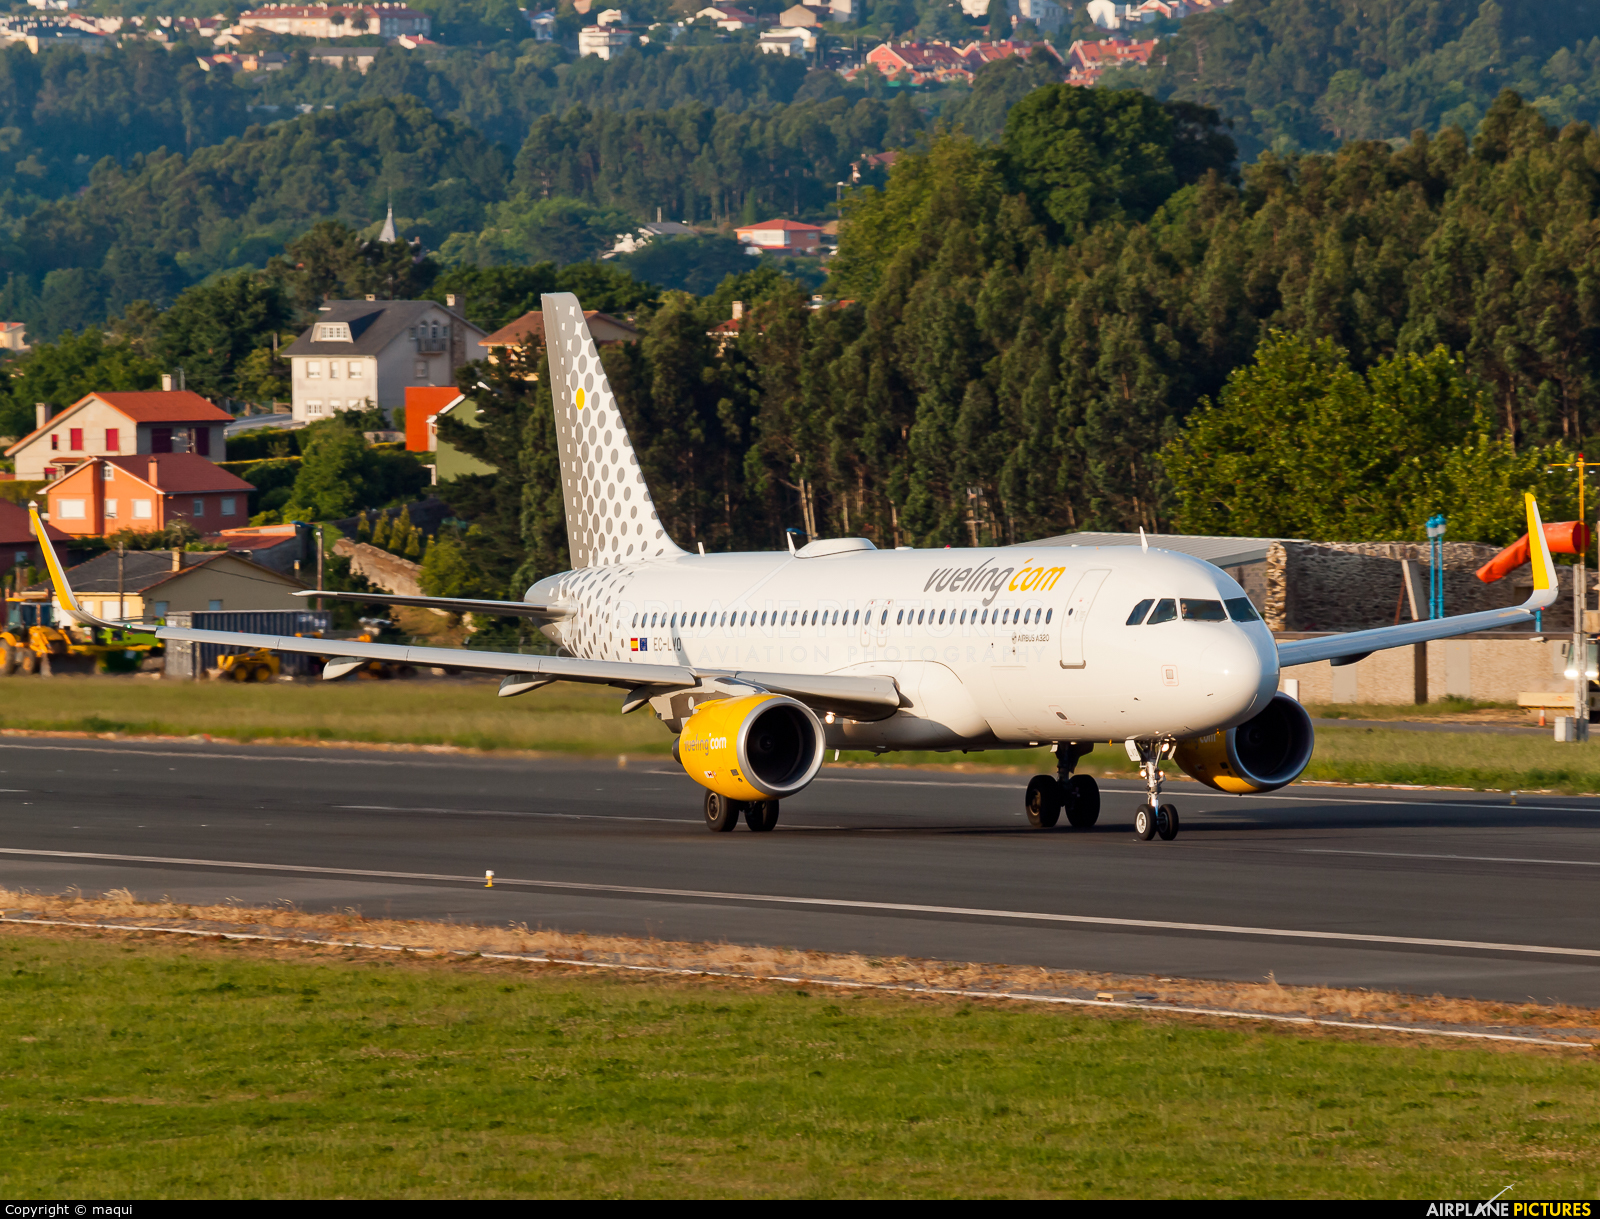 Vueling Airlines EC-LVO aircraft at La Coruña